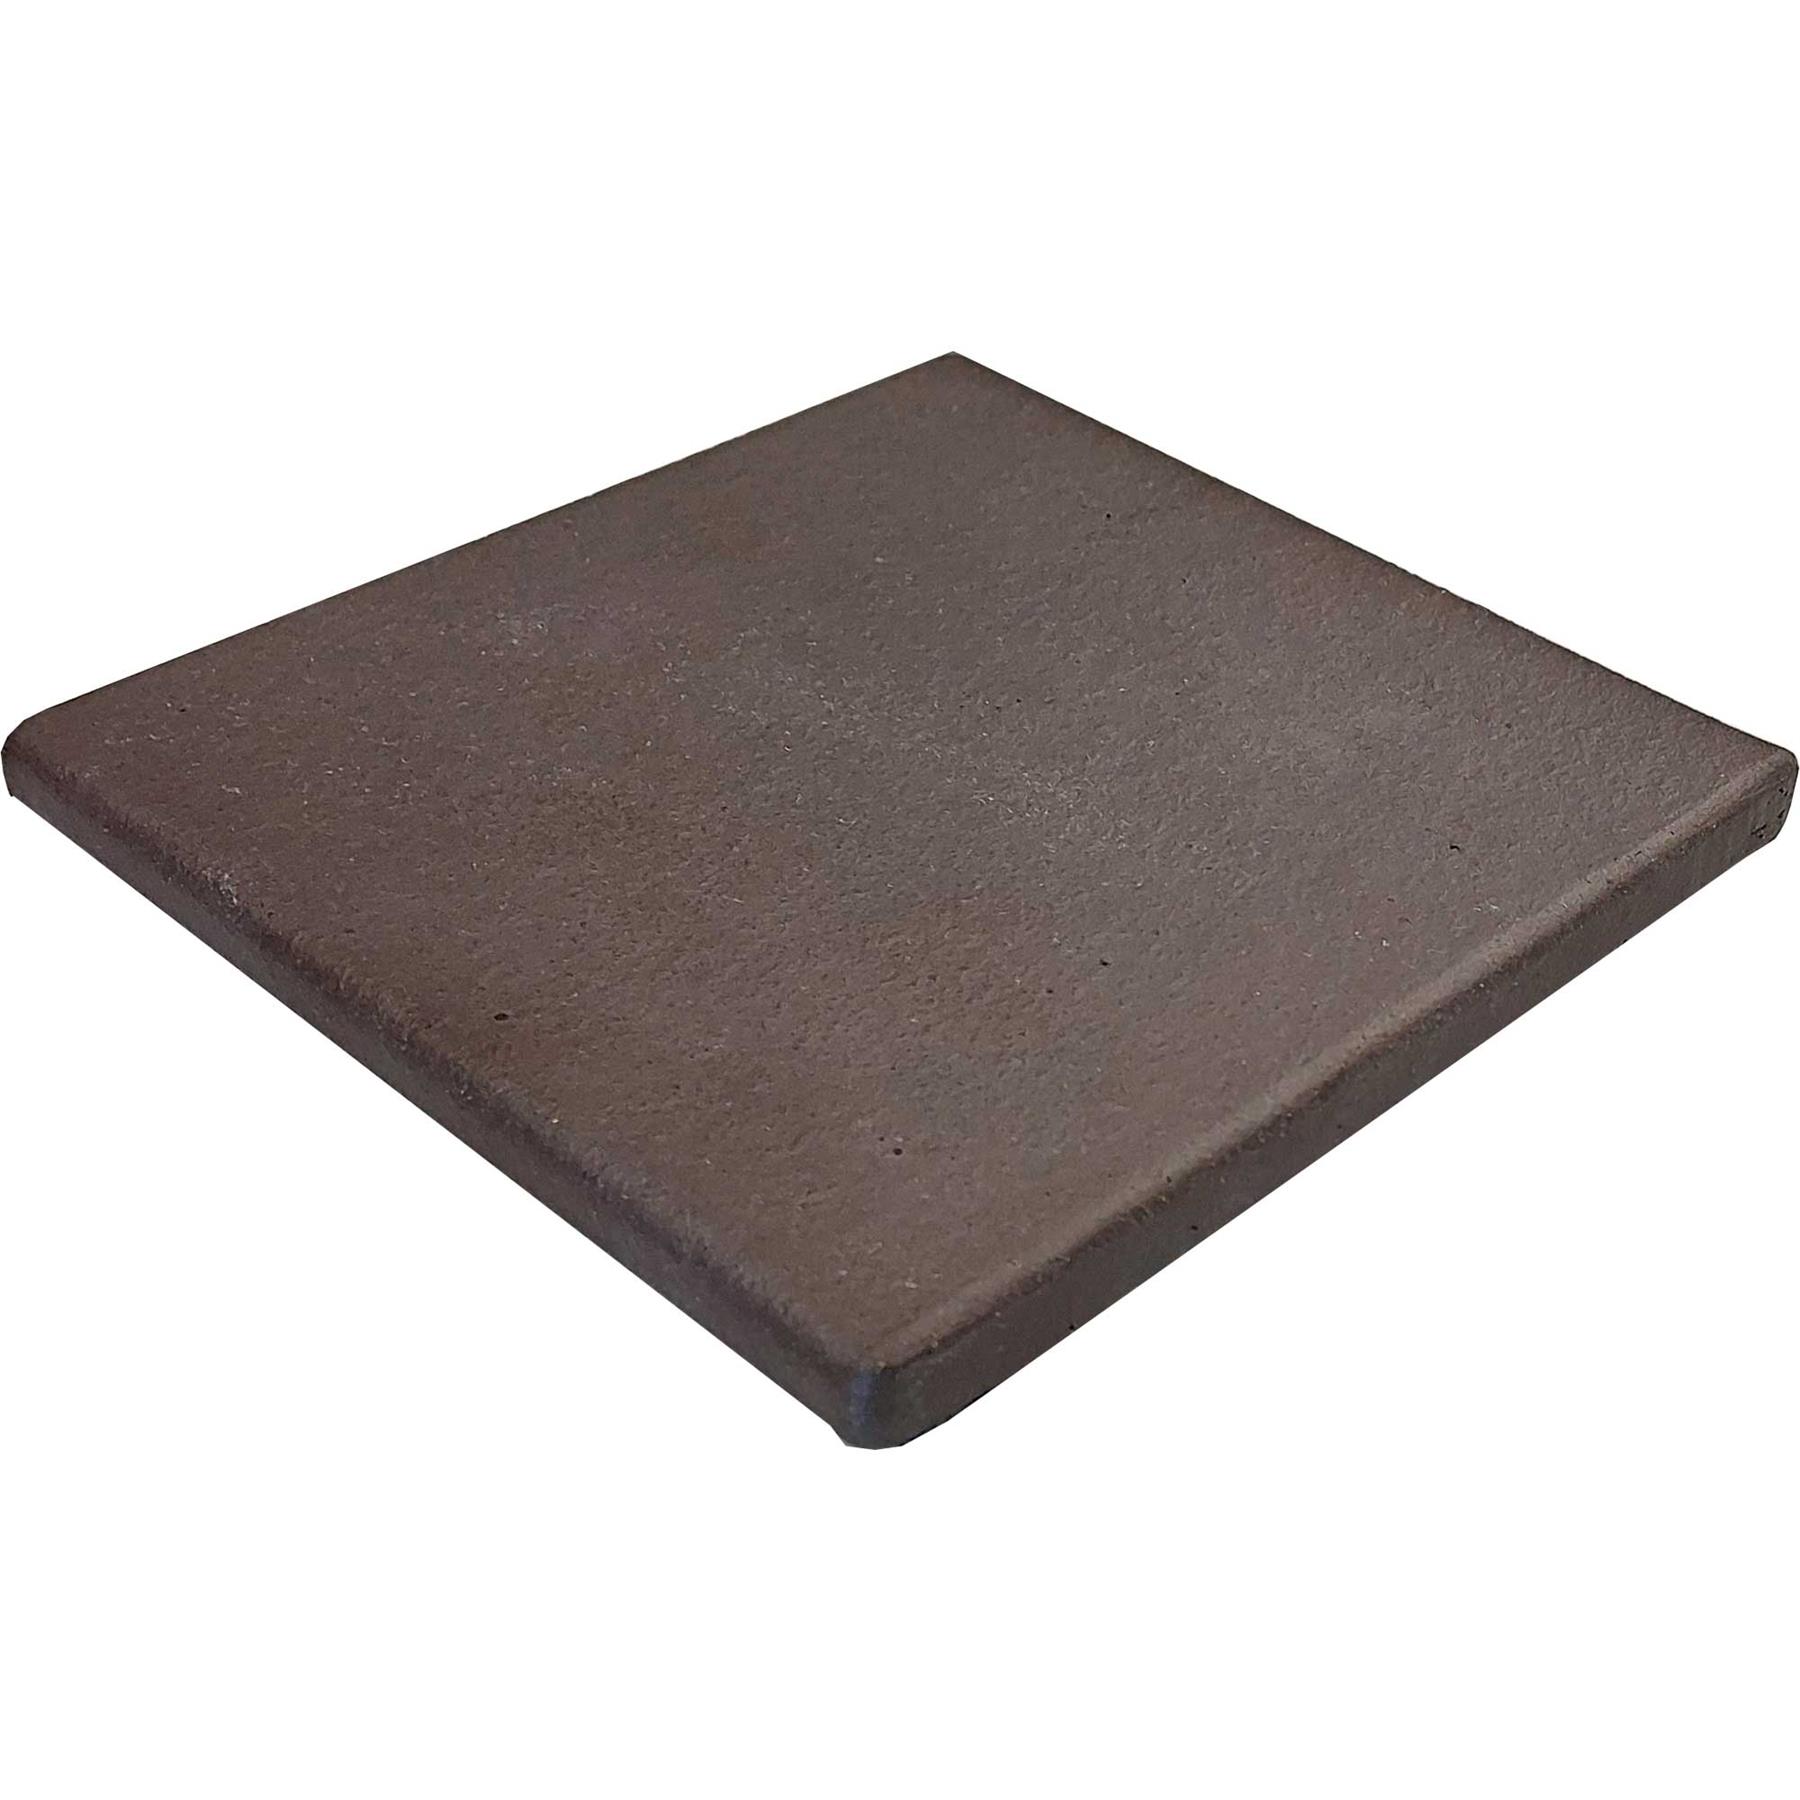 New Authentic Black-Brown Quarry Tiles Double Round Edge 150x150mm